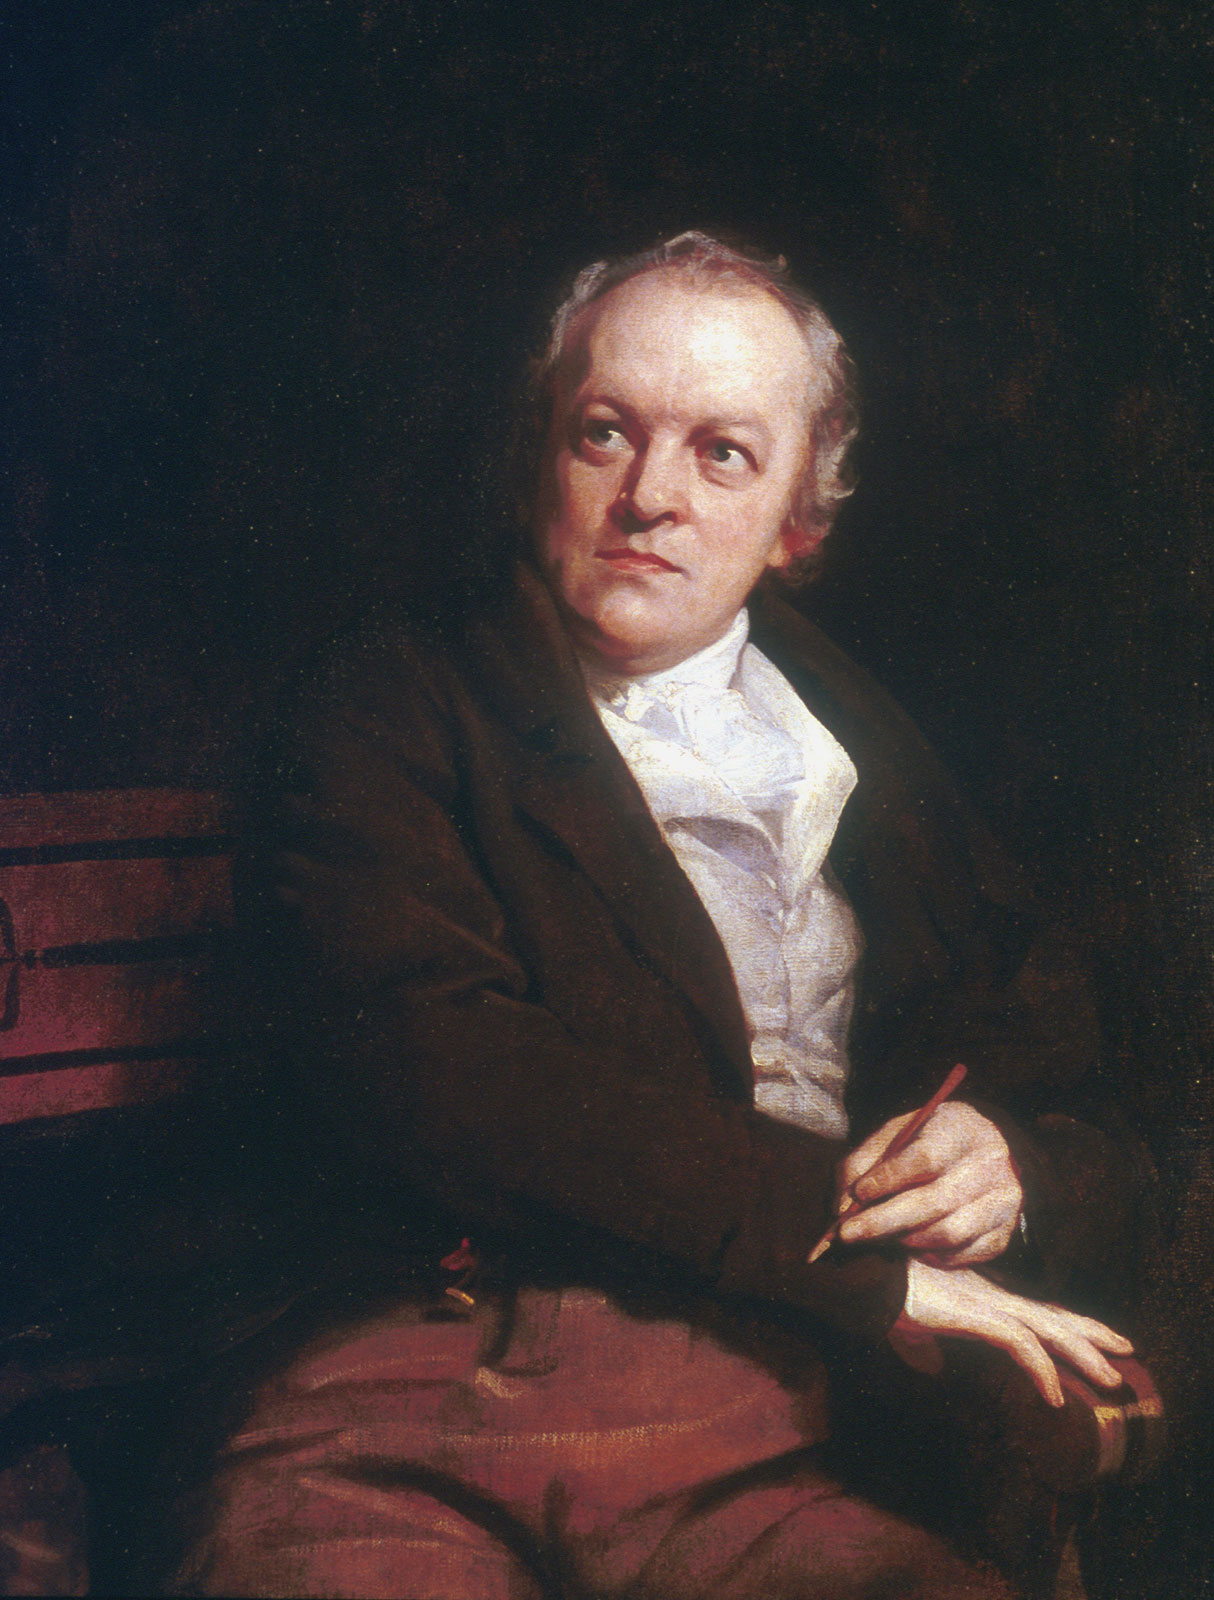 William-Blake-Öl-Leinwand-Thomas-Phillips-National-1807